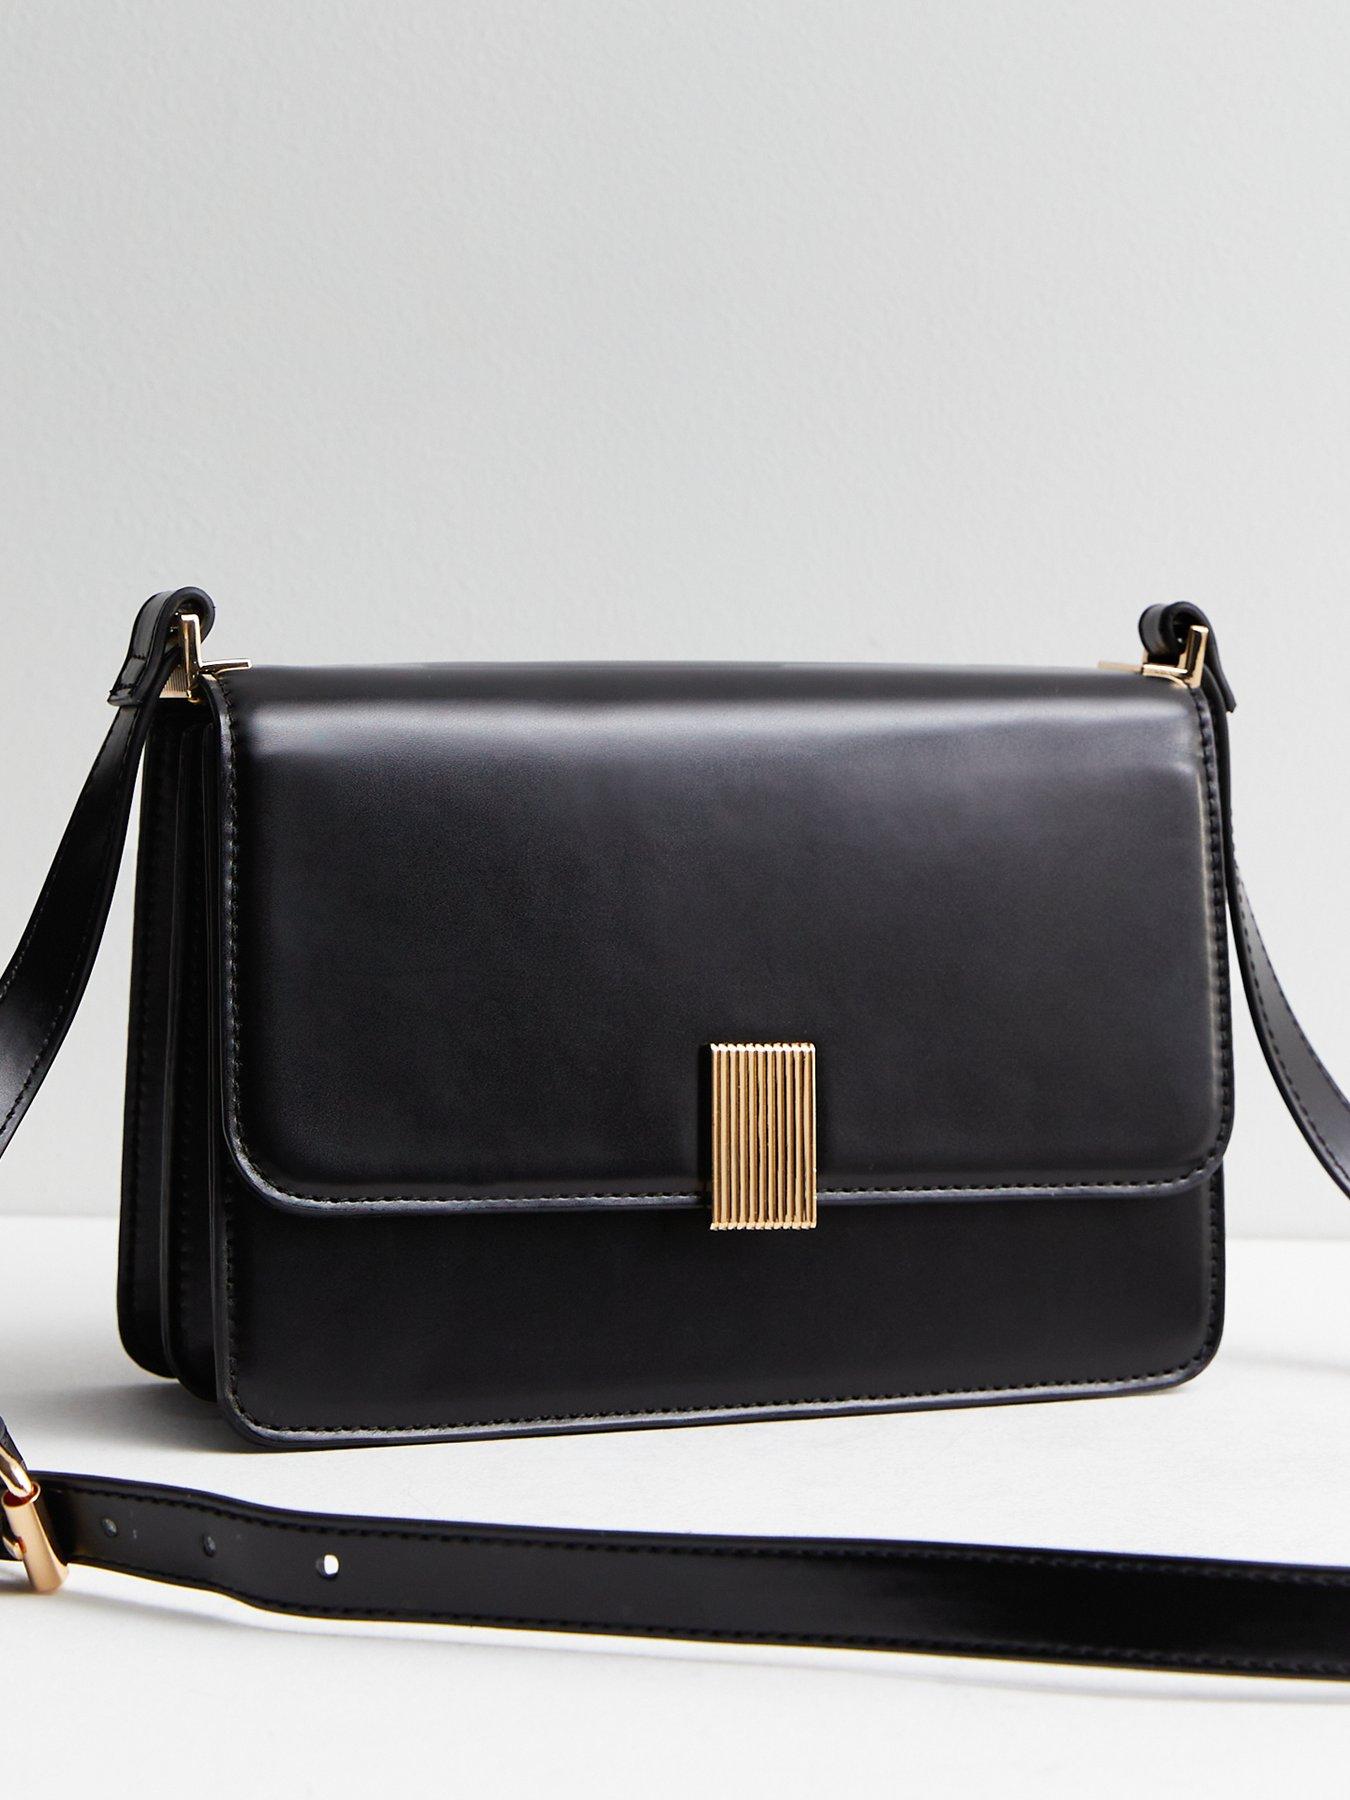 New Look Leather-Look Cross Body Bag - Black | very.co.uk